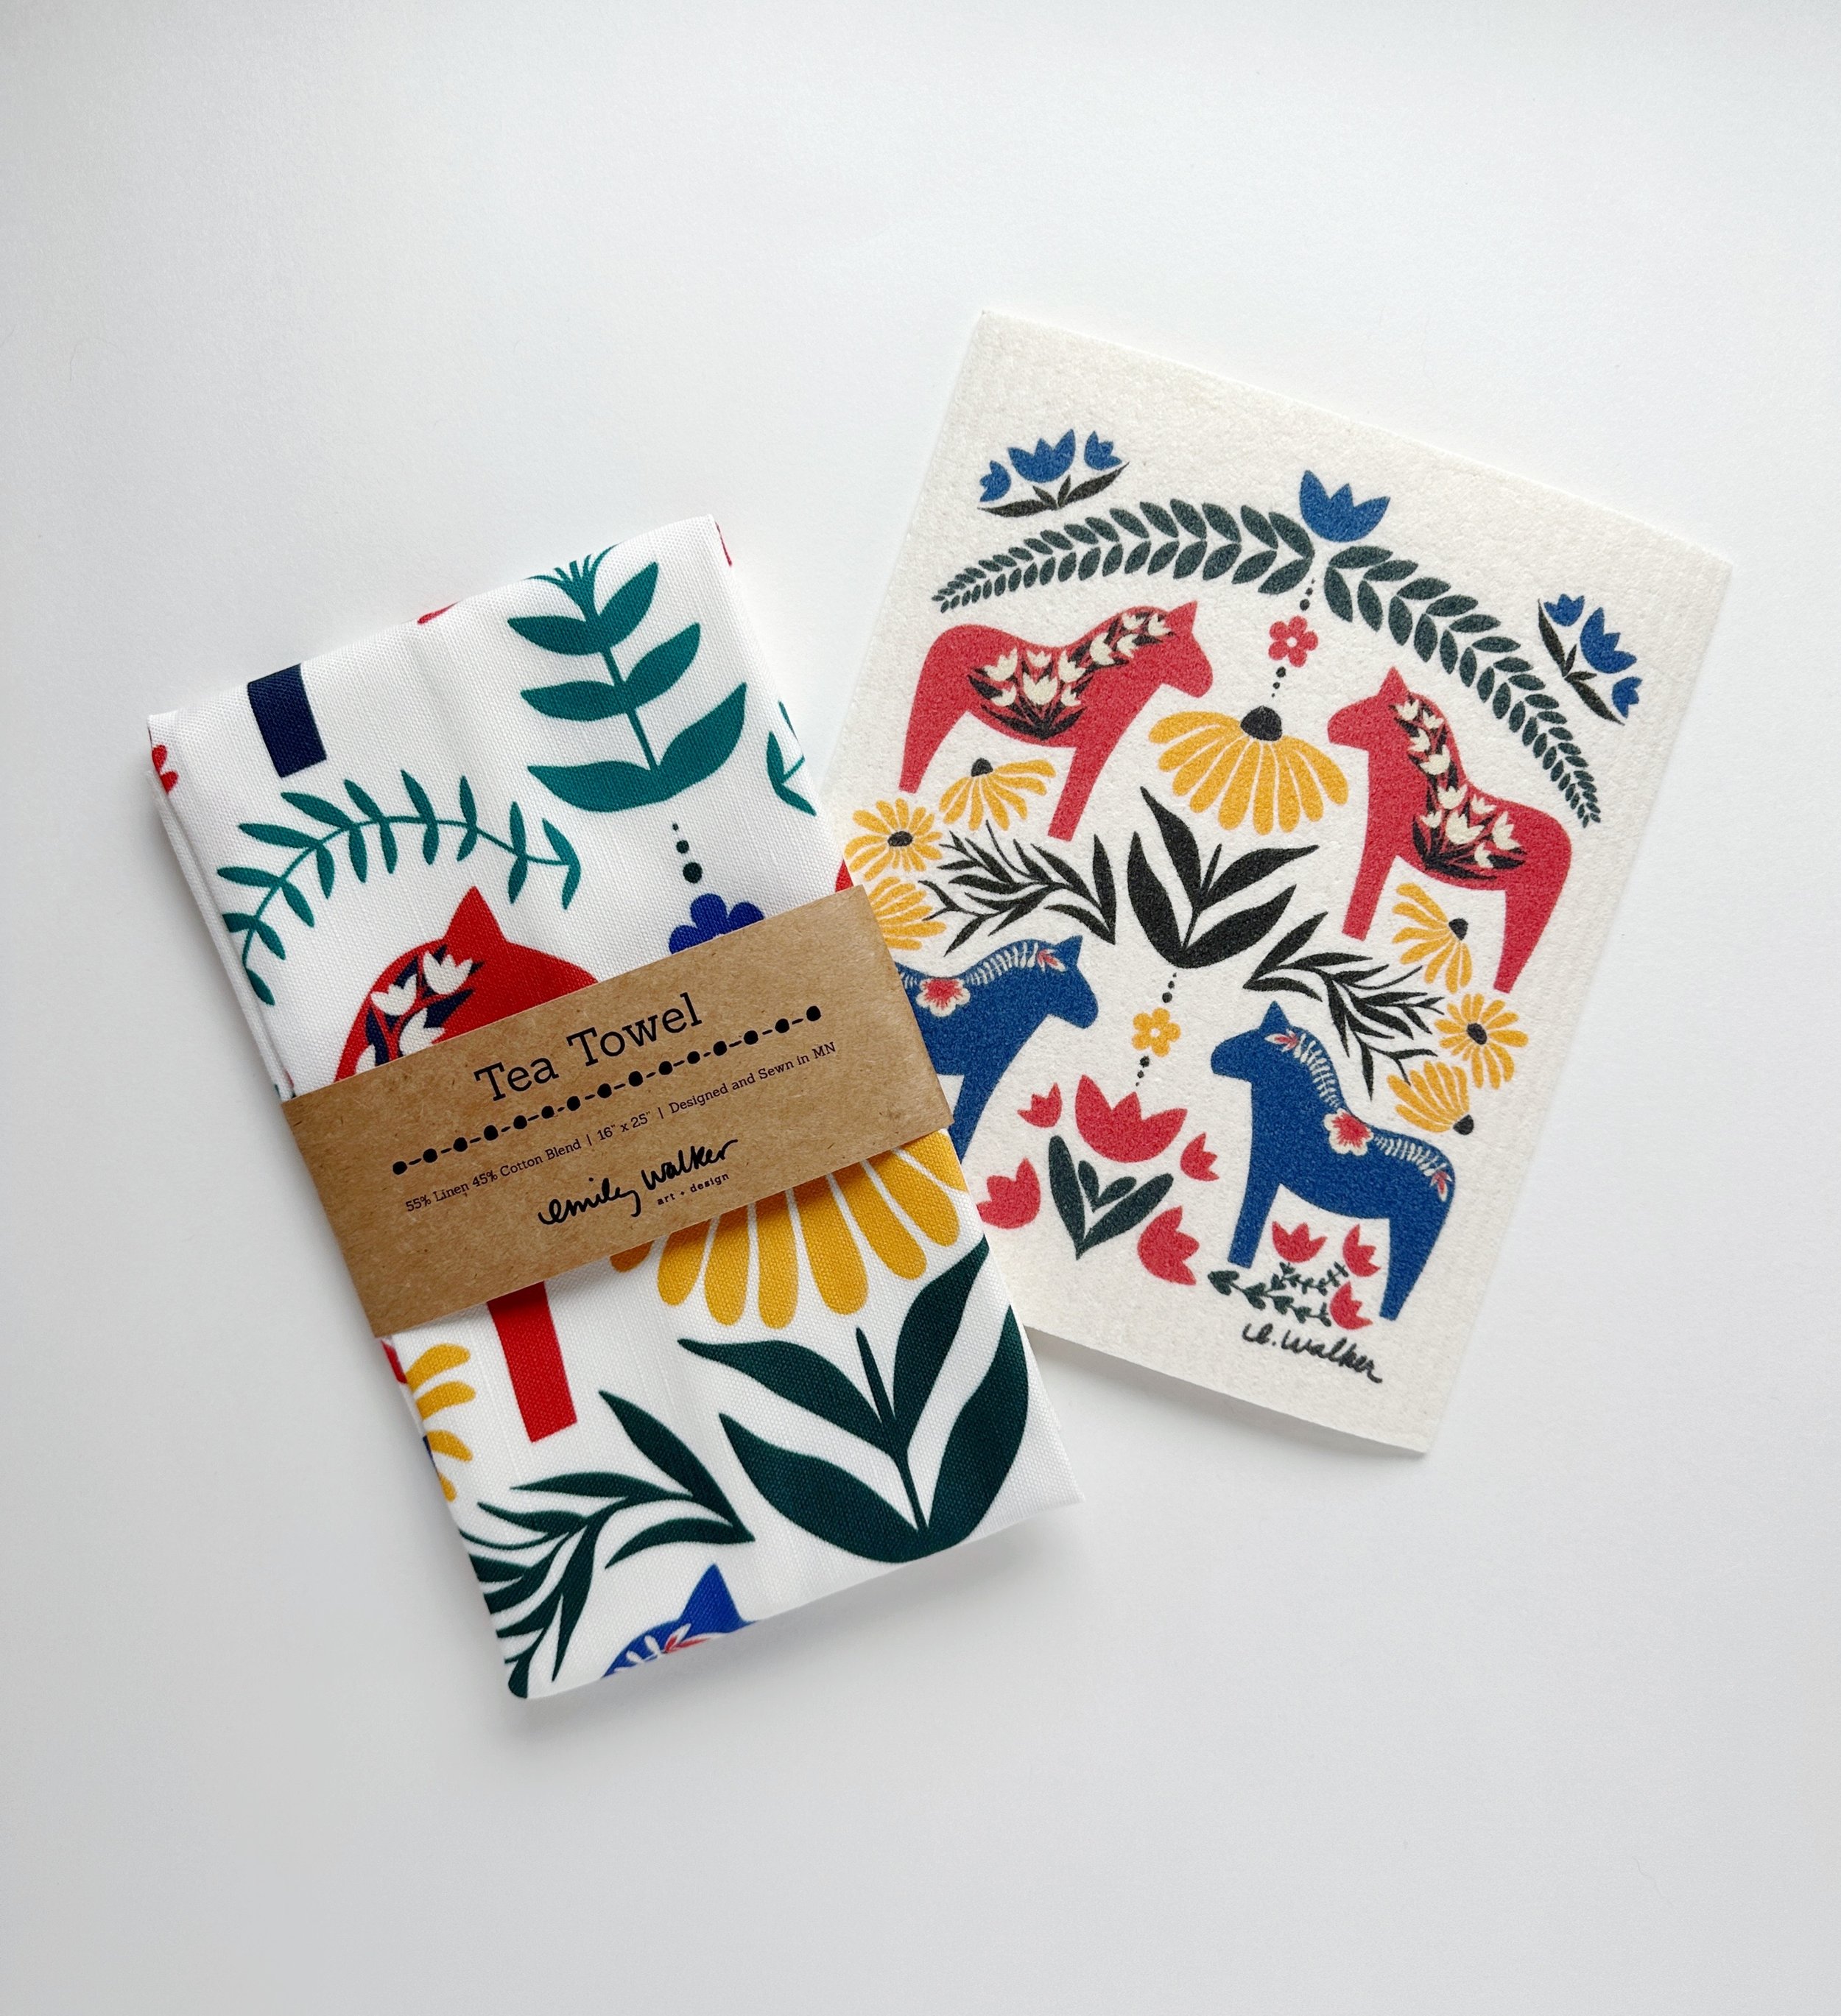 Dala Horse Tea Towel and Swedish Dishcloth gift set